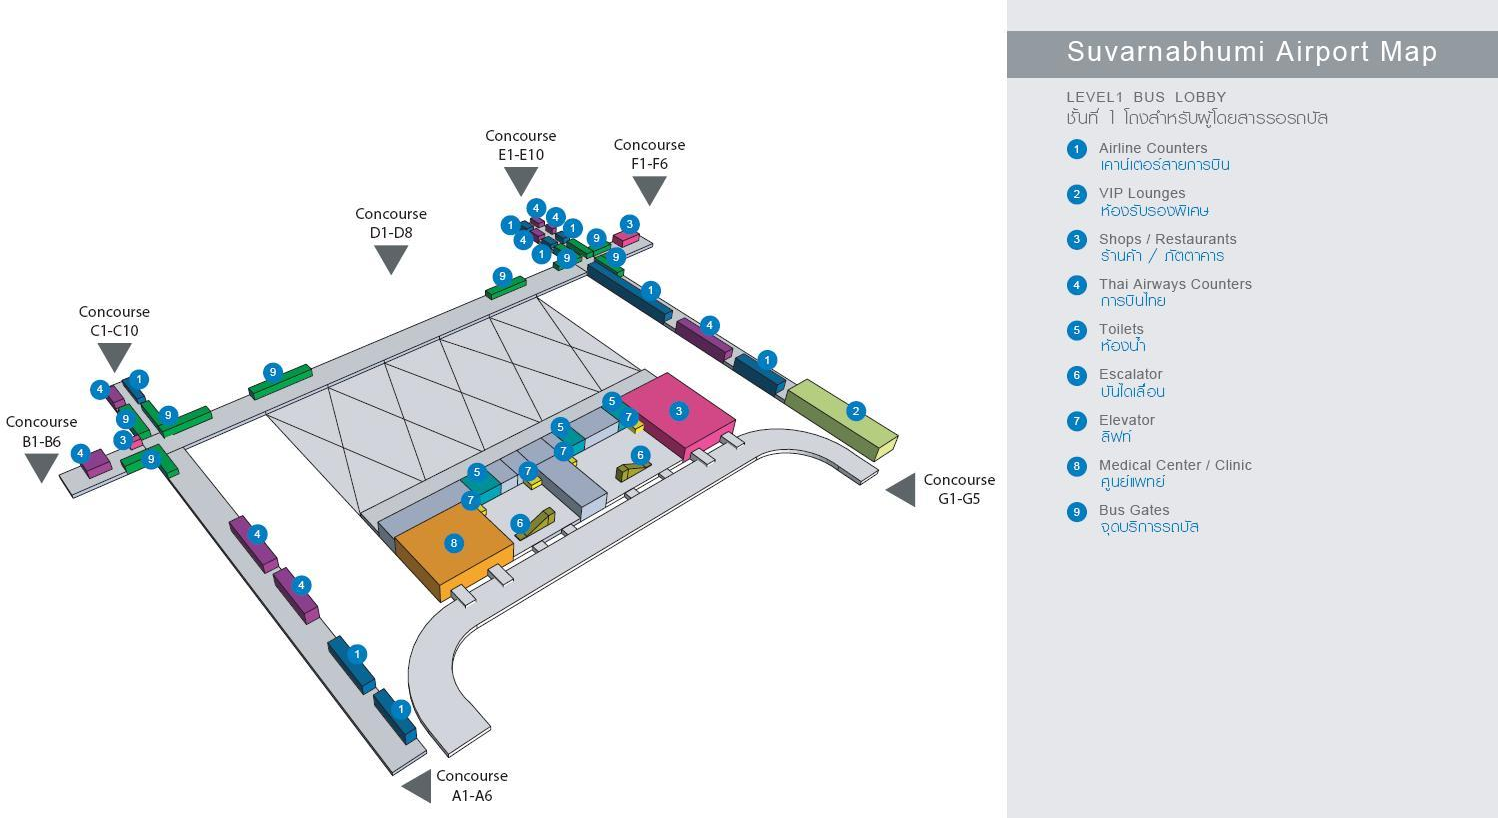 Схема первого этажа аэропорта Суварнабхуми